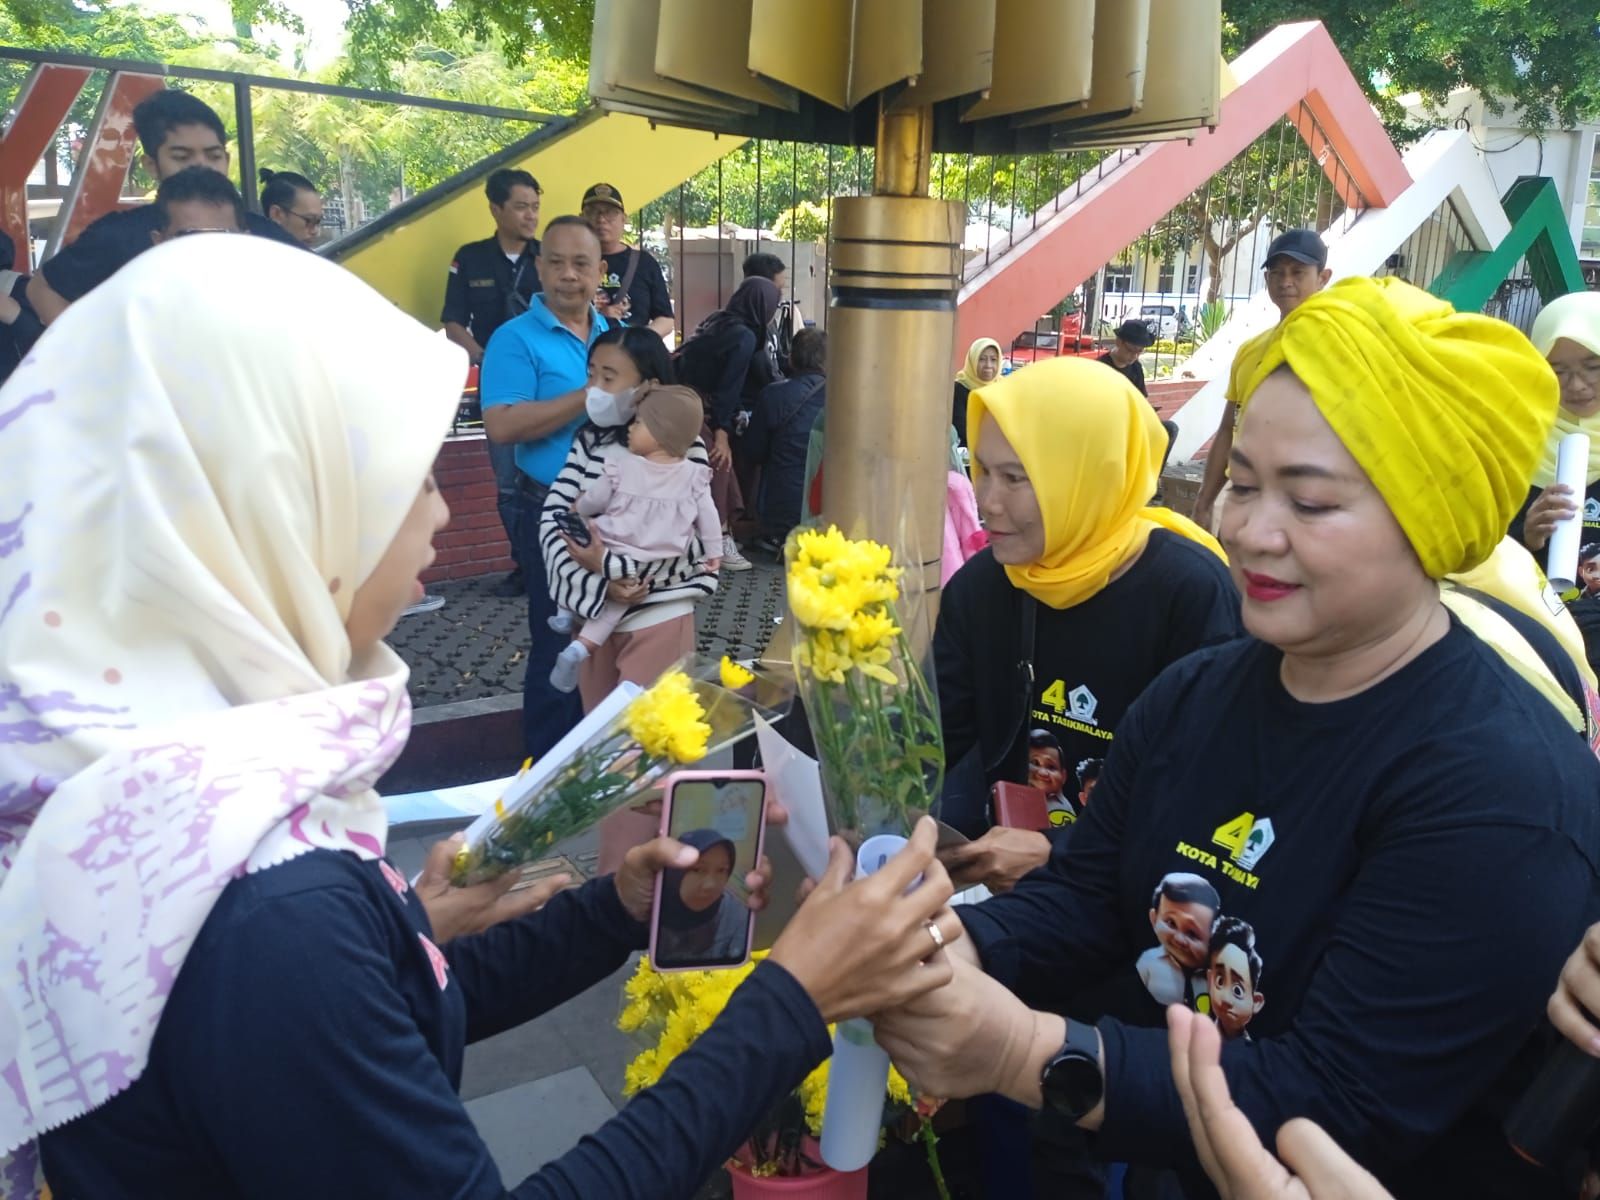 KETUA HWK Ina Fartini menyerahkan bunga kepada kaum ibu yang melintas ke taman Kota.*